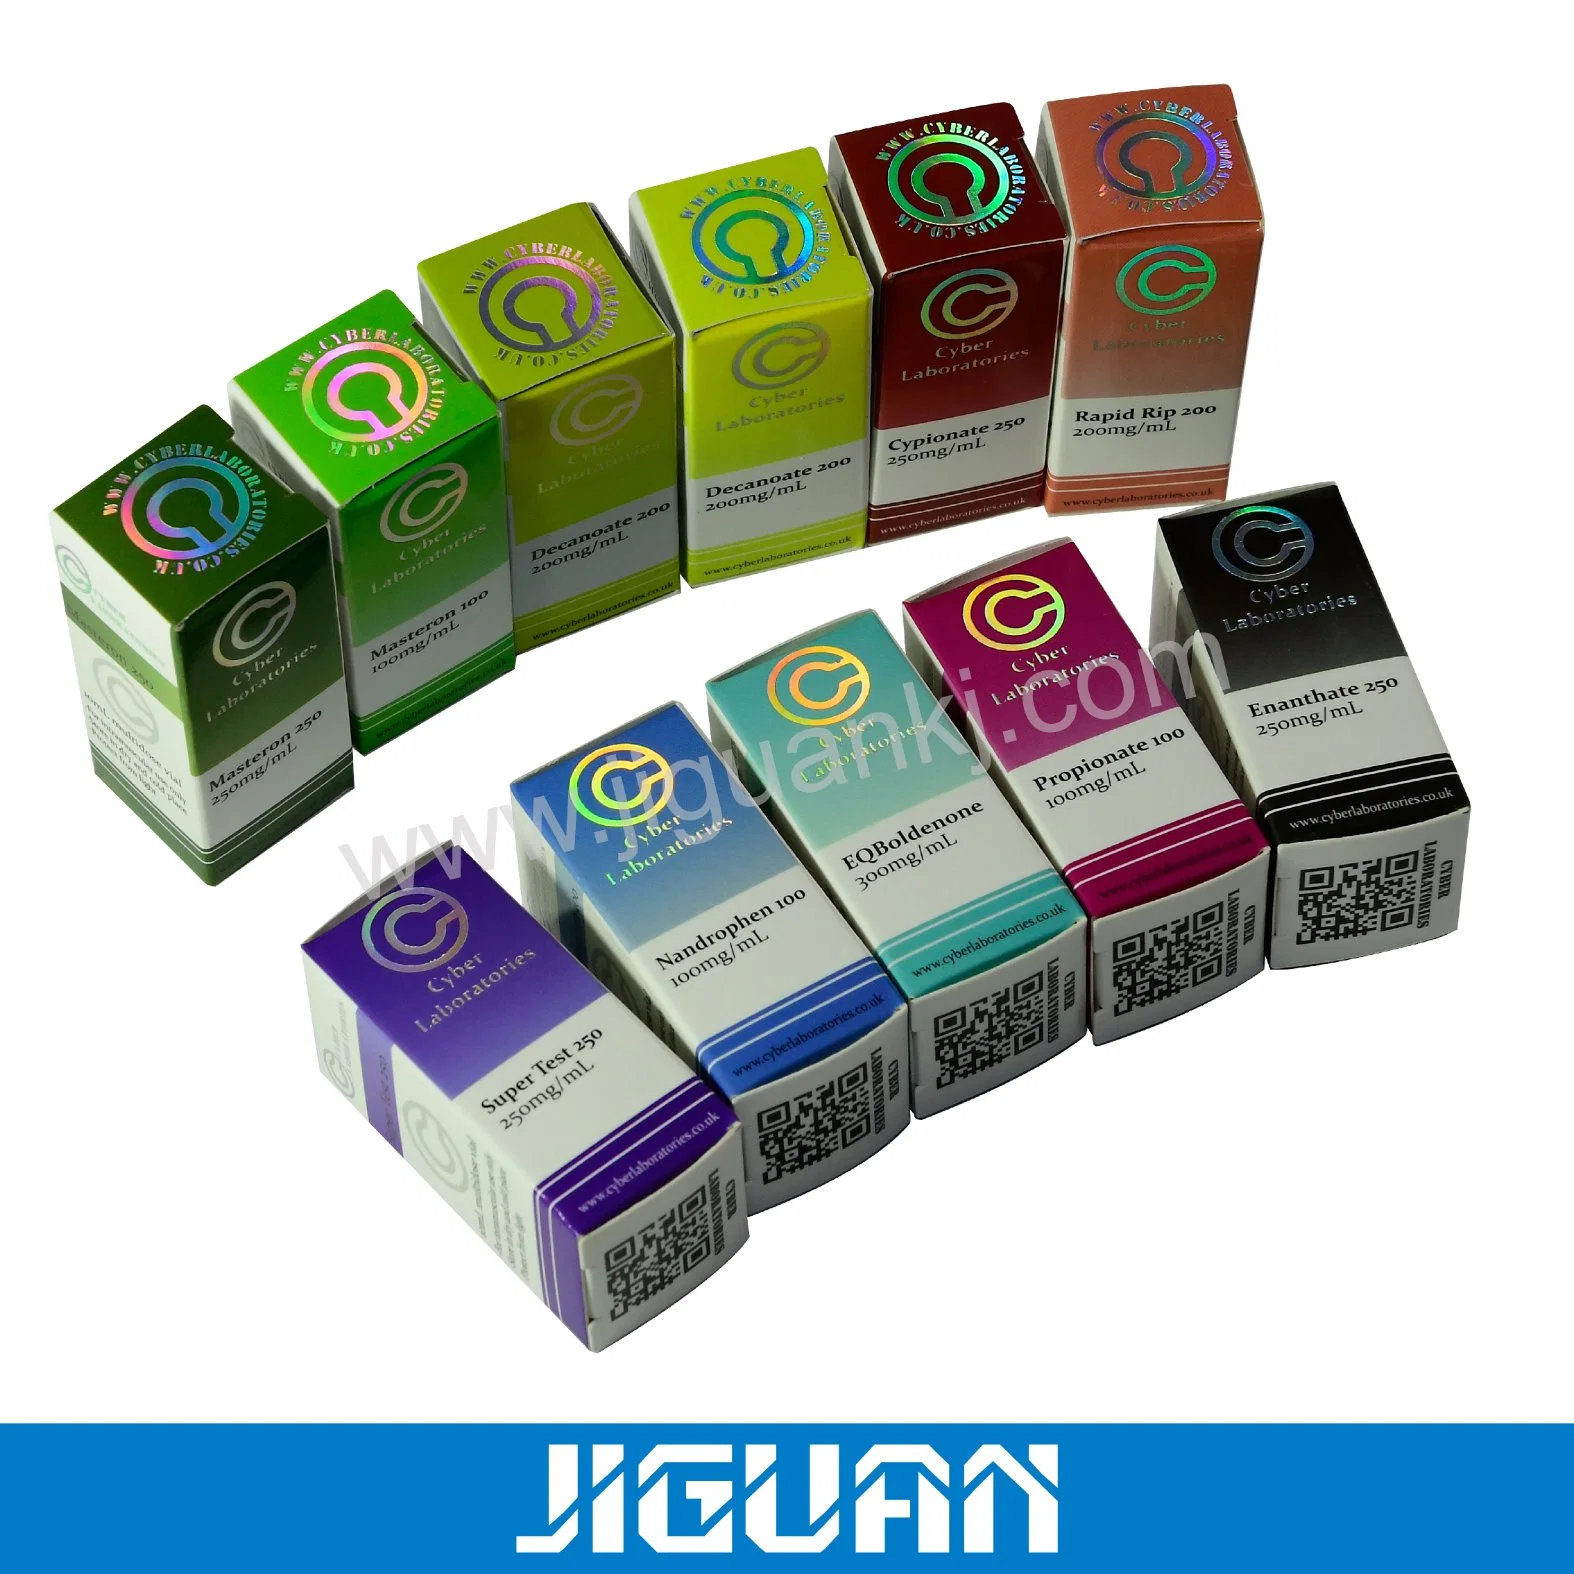 Custom Medicine Cardboard Packaging Holographic Steroids 15ml/30ml Bottle Paper Box 10ml Vial Label and 10ml Vial Small Paper Box Packaging for Injection